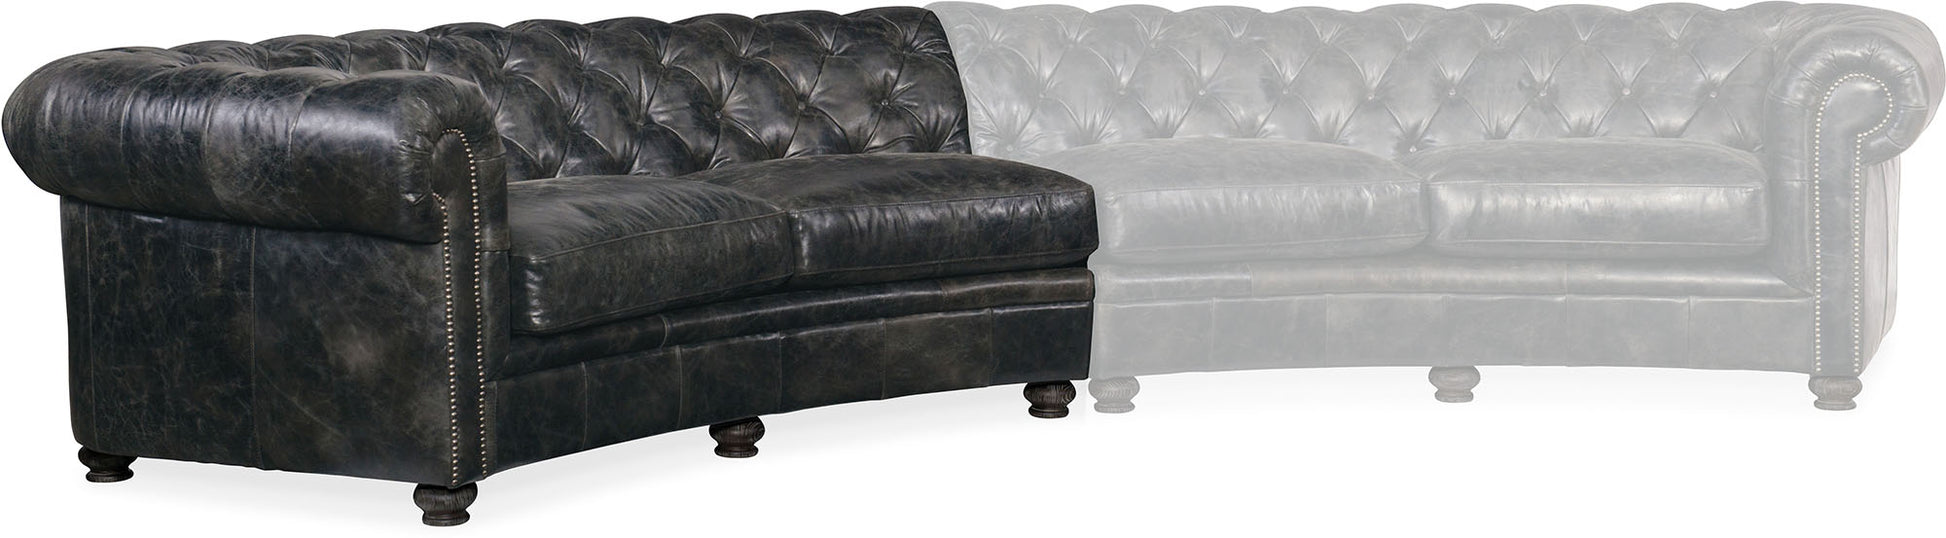 Hooker Furniture Nicolla Stationary Sofa